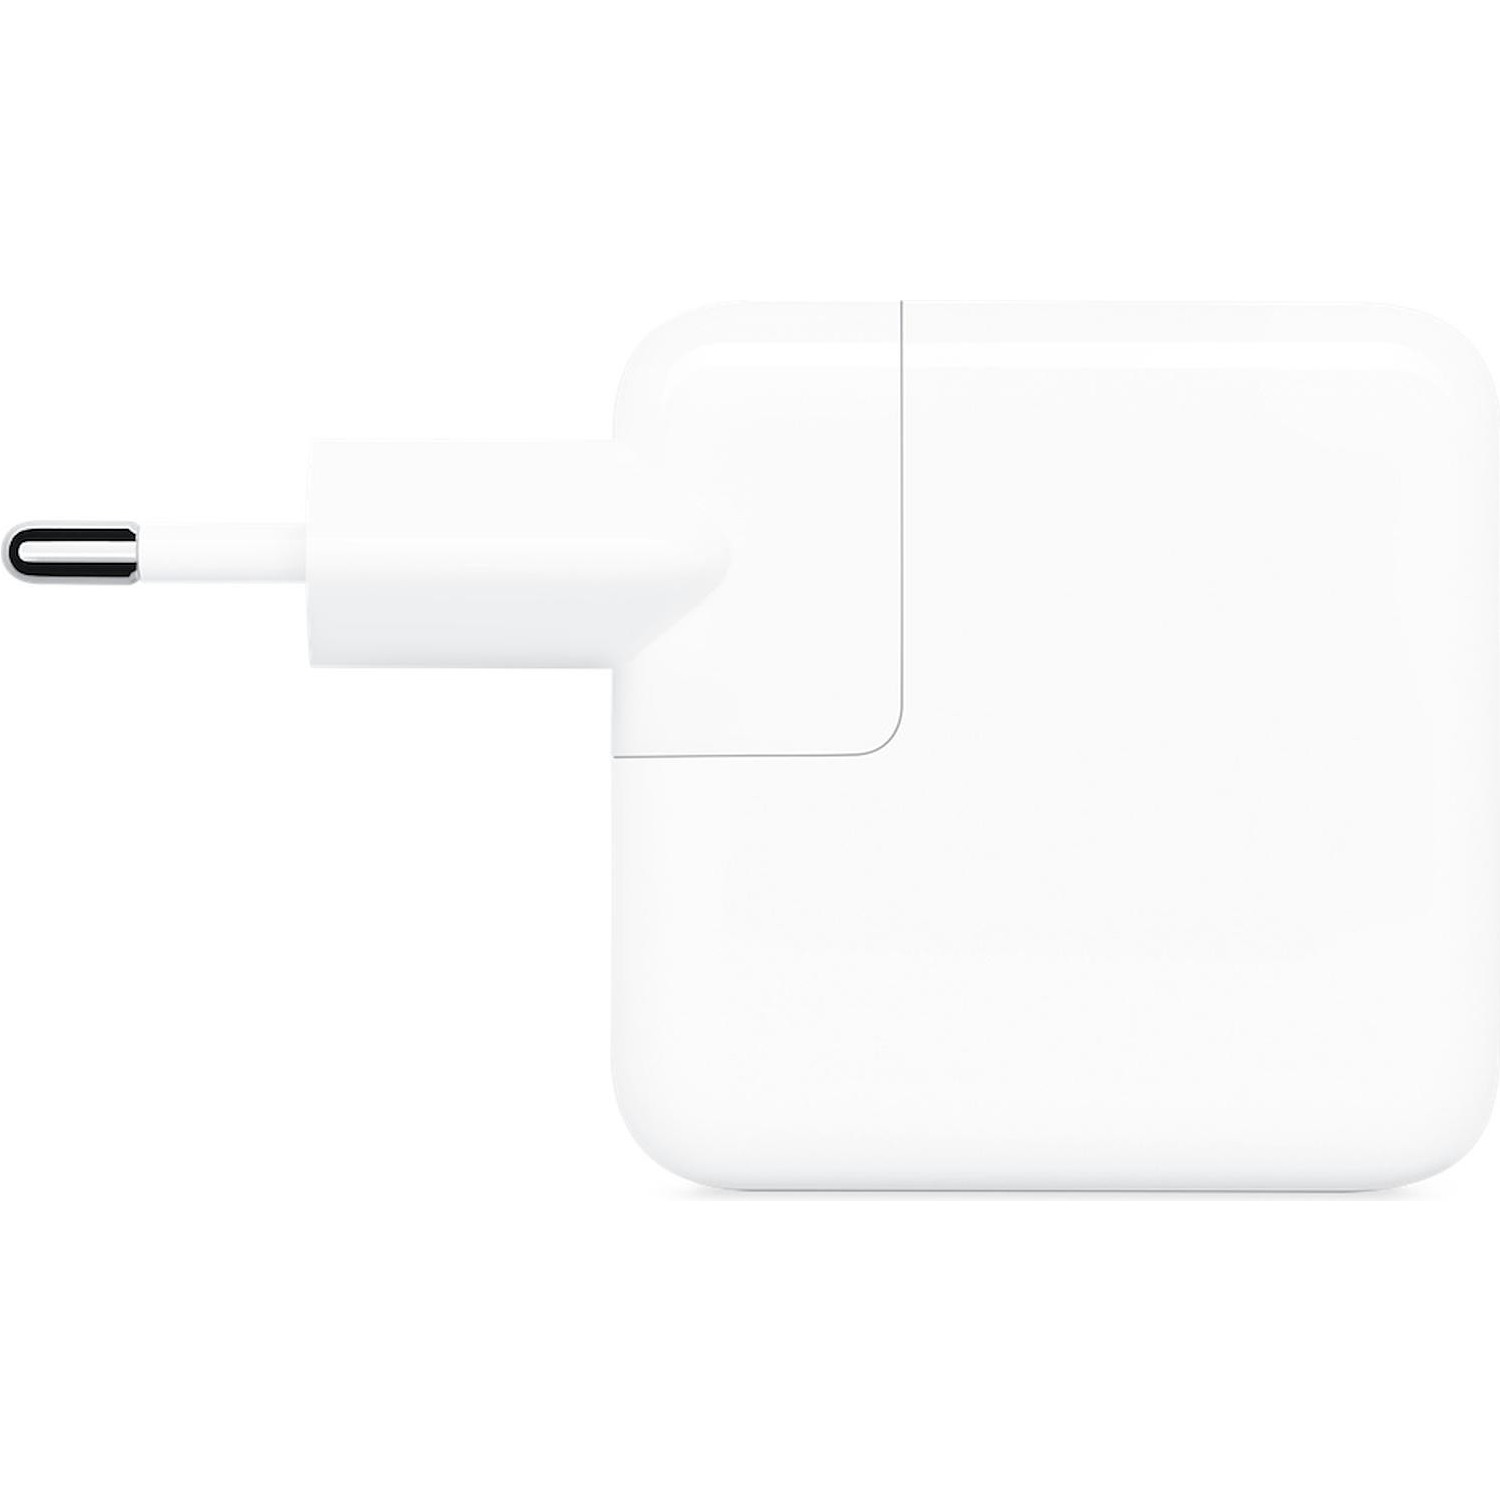 Immagine per Alimentatore Apple USB-C 30W da DIMOStore